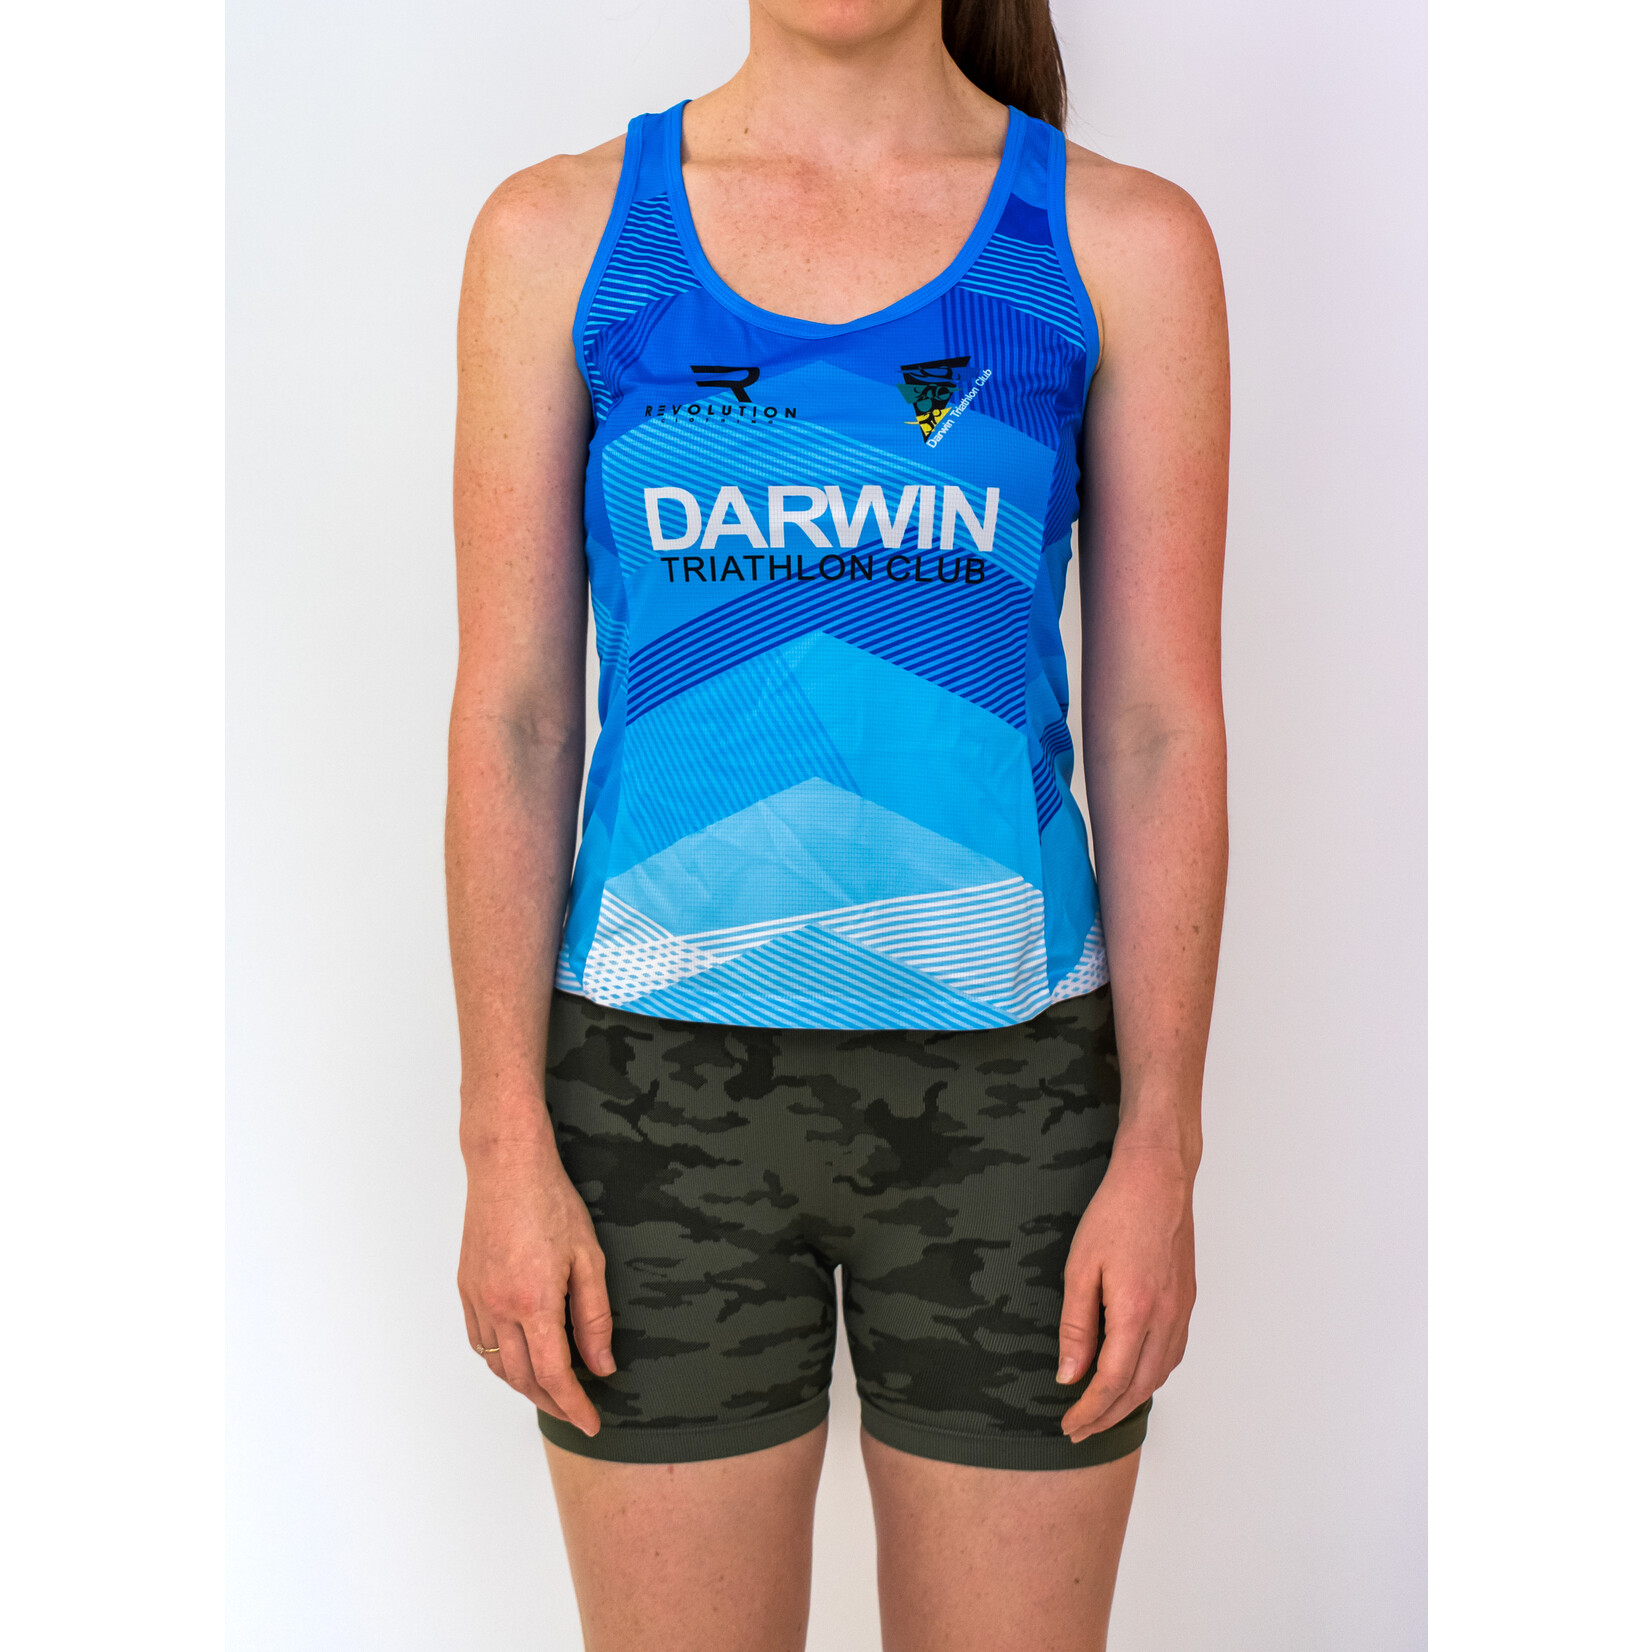 Revolution Clothing Womens Darwin Tri Club Running Singlet